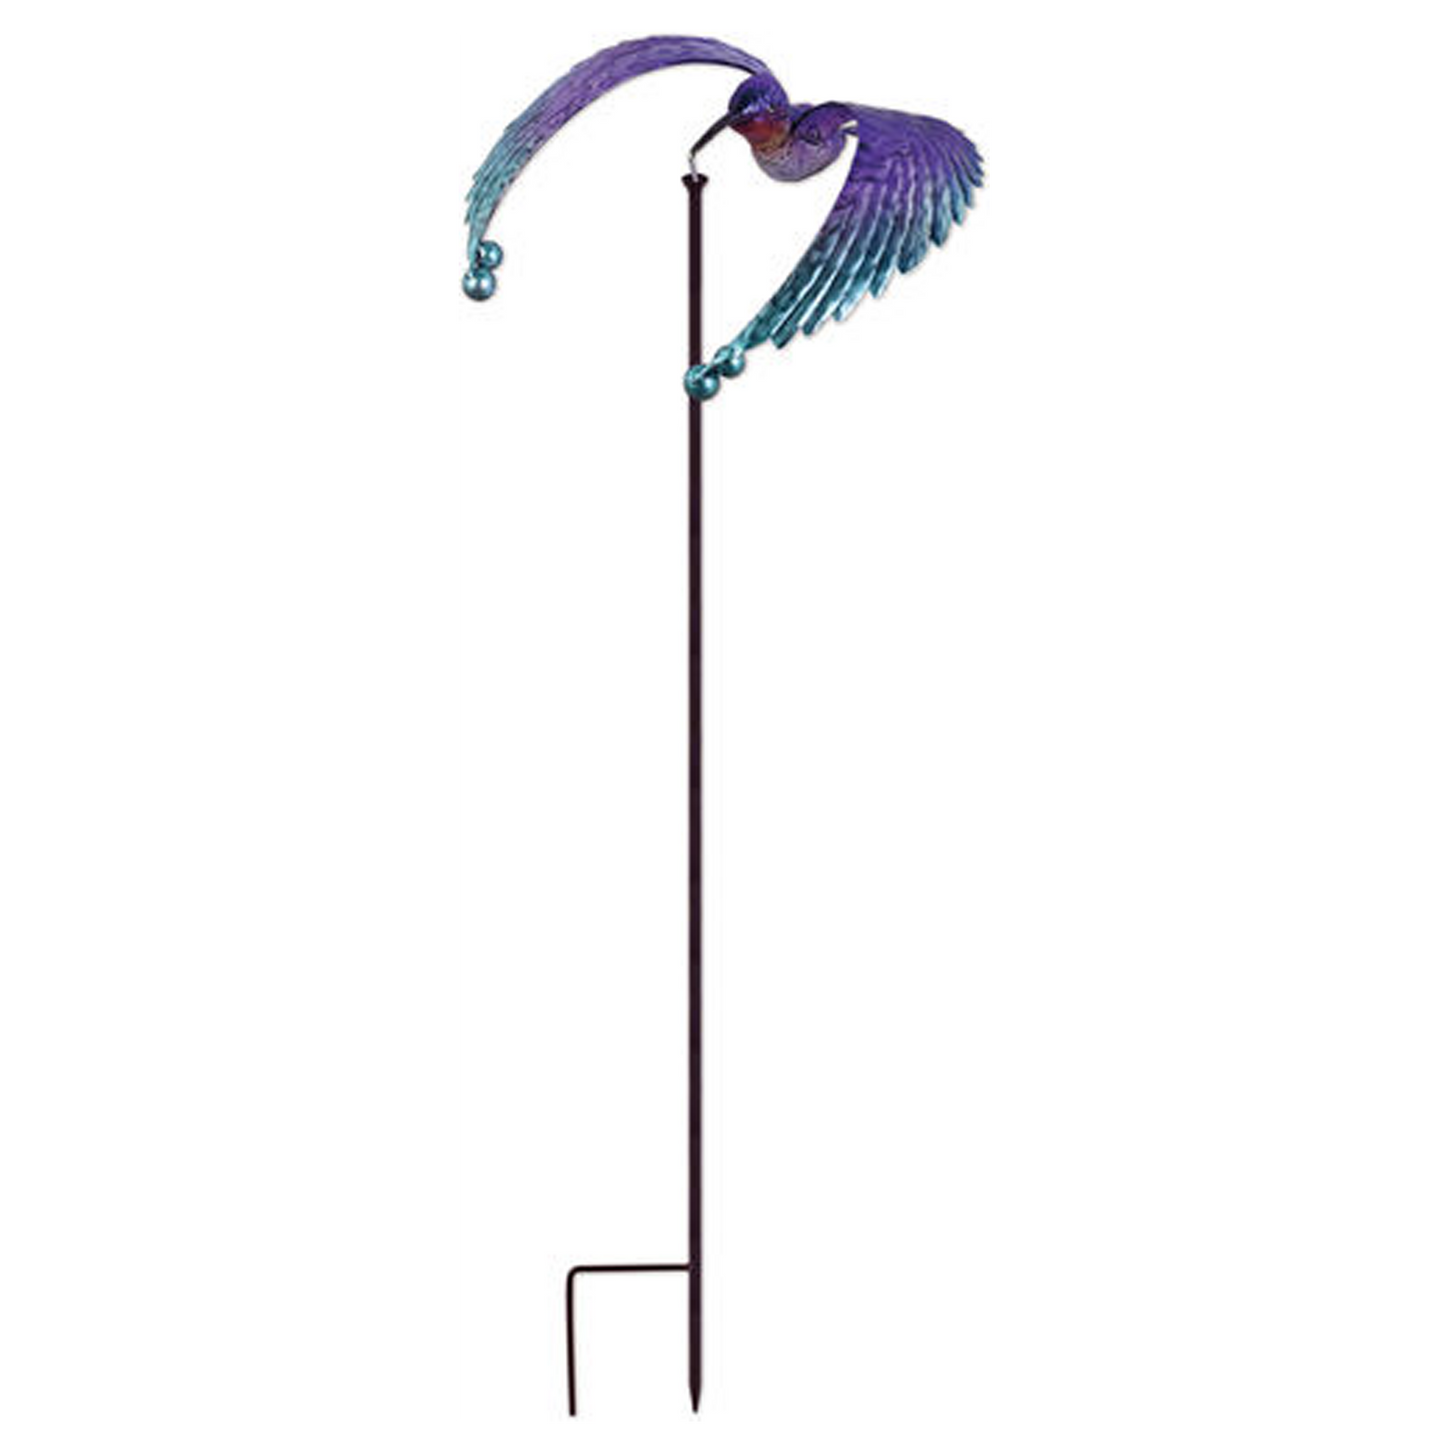 Metal Purple Hummingbird in Flight Spinner Garden Stake Balancer Outdoor Decor